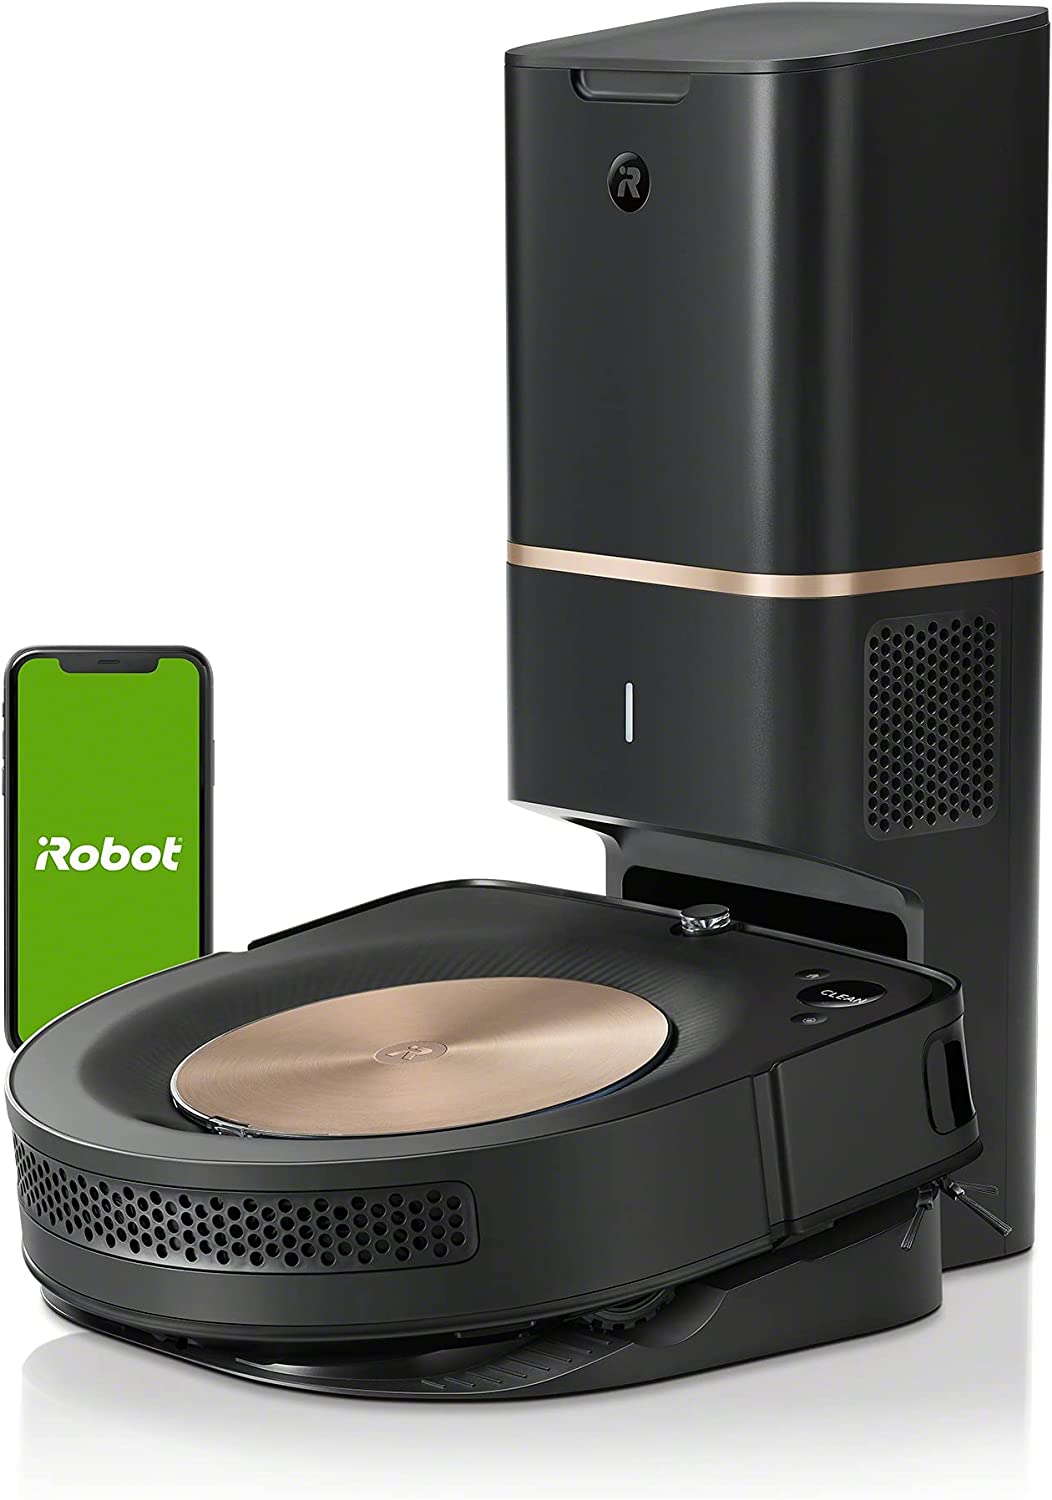 Roomba s9+ versus Roomba i7+ versus Roomba j7+